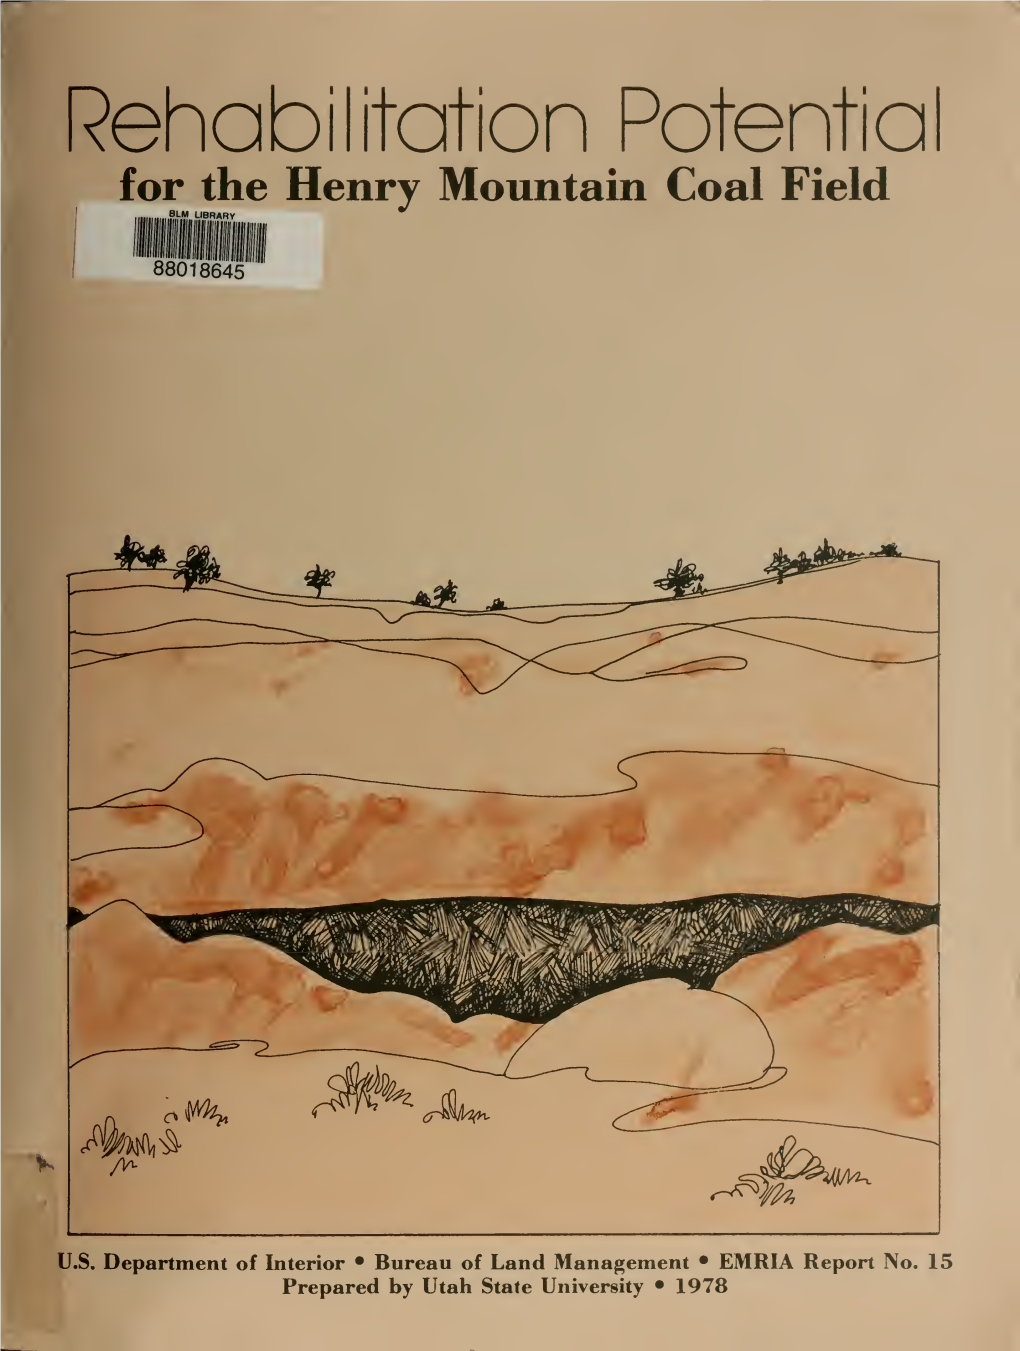 Henry Mountain Coal Field, Garfield County, Utah